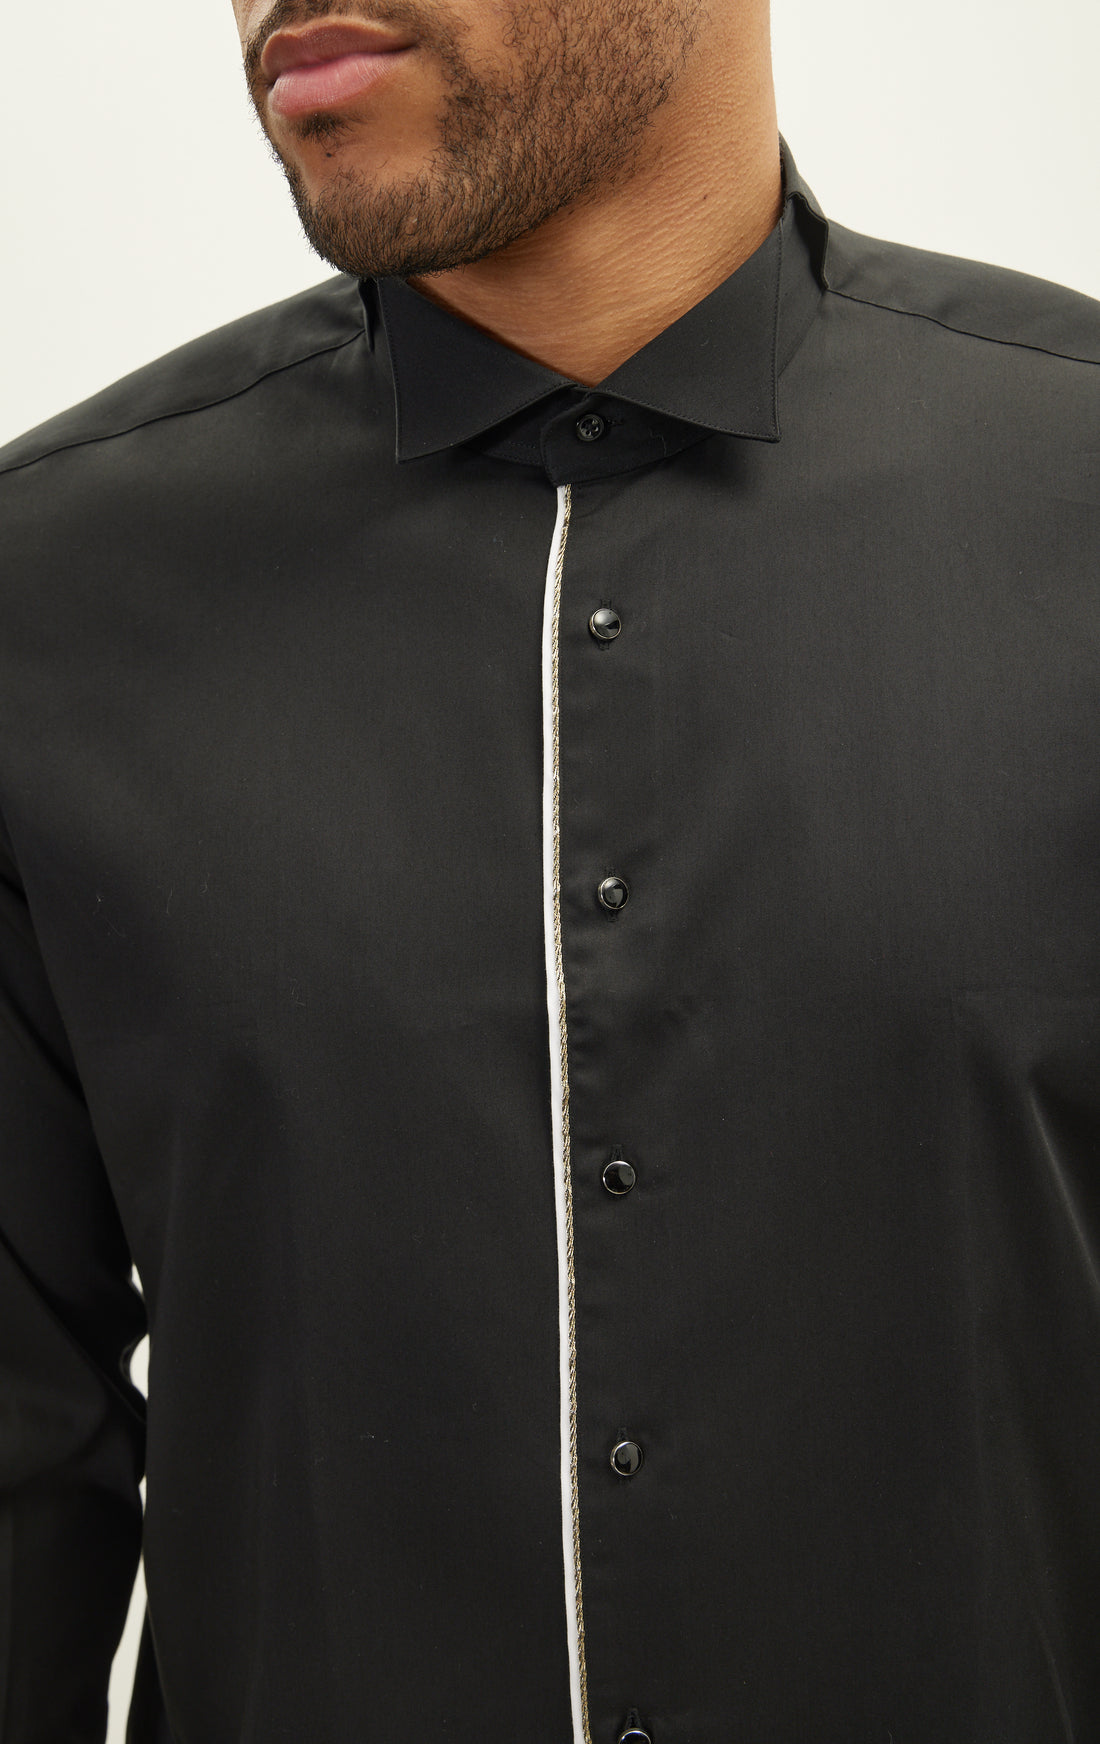 Piped Lurex Detailed Tuxedo Shirt - Black White